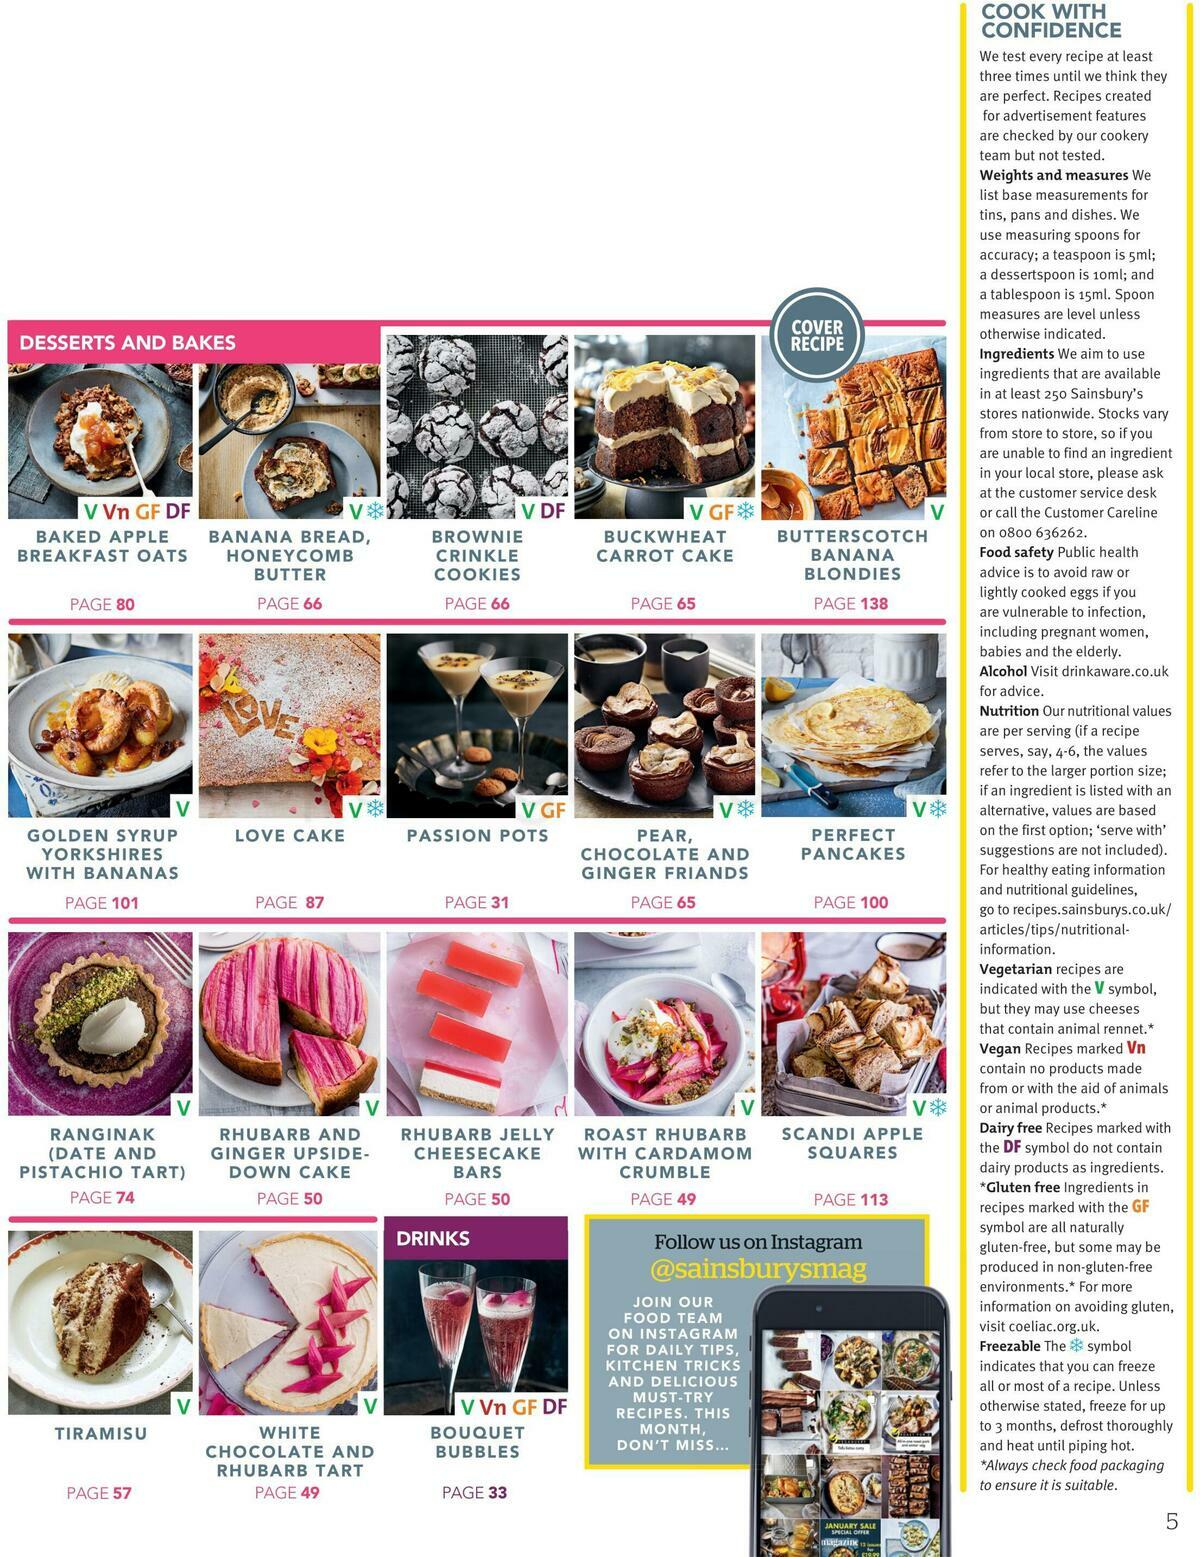 Sainsbury's Magazine February Offers from 1 February